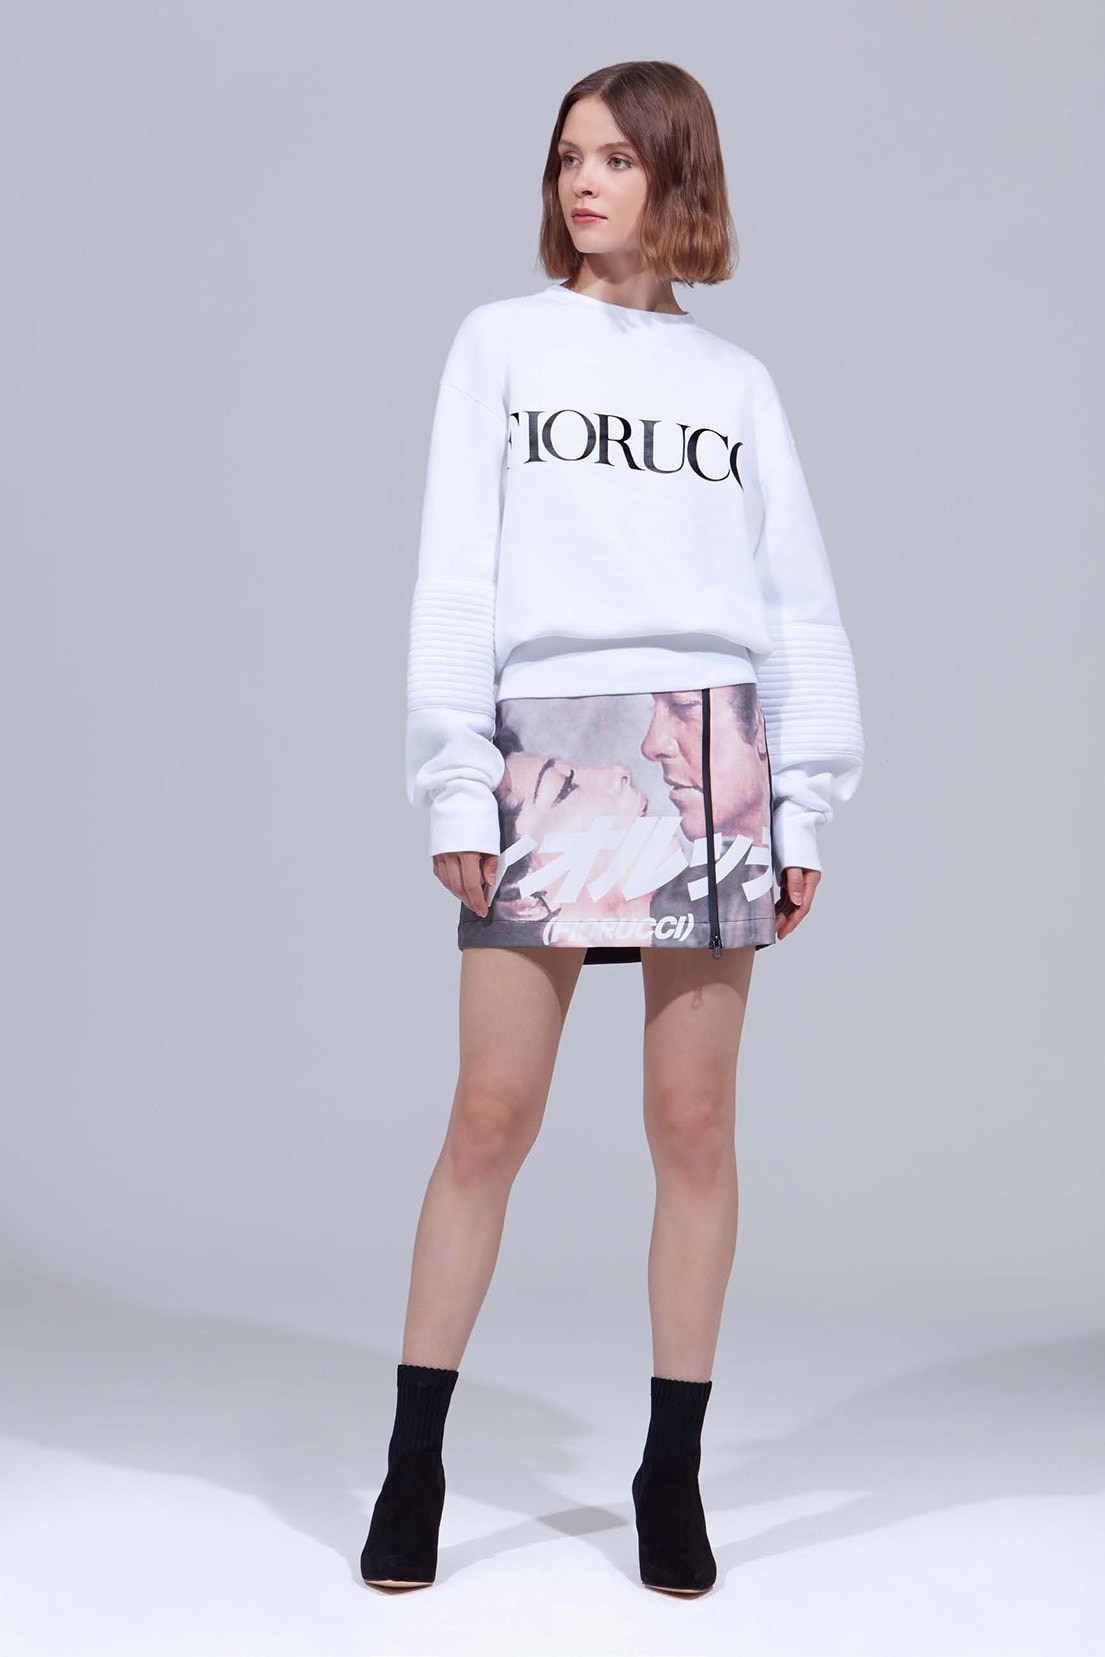 Fiorucci Spring/Summer 2019 Lookbook Menswear Womenswear SS19 Availability For Sale Information Details